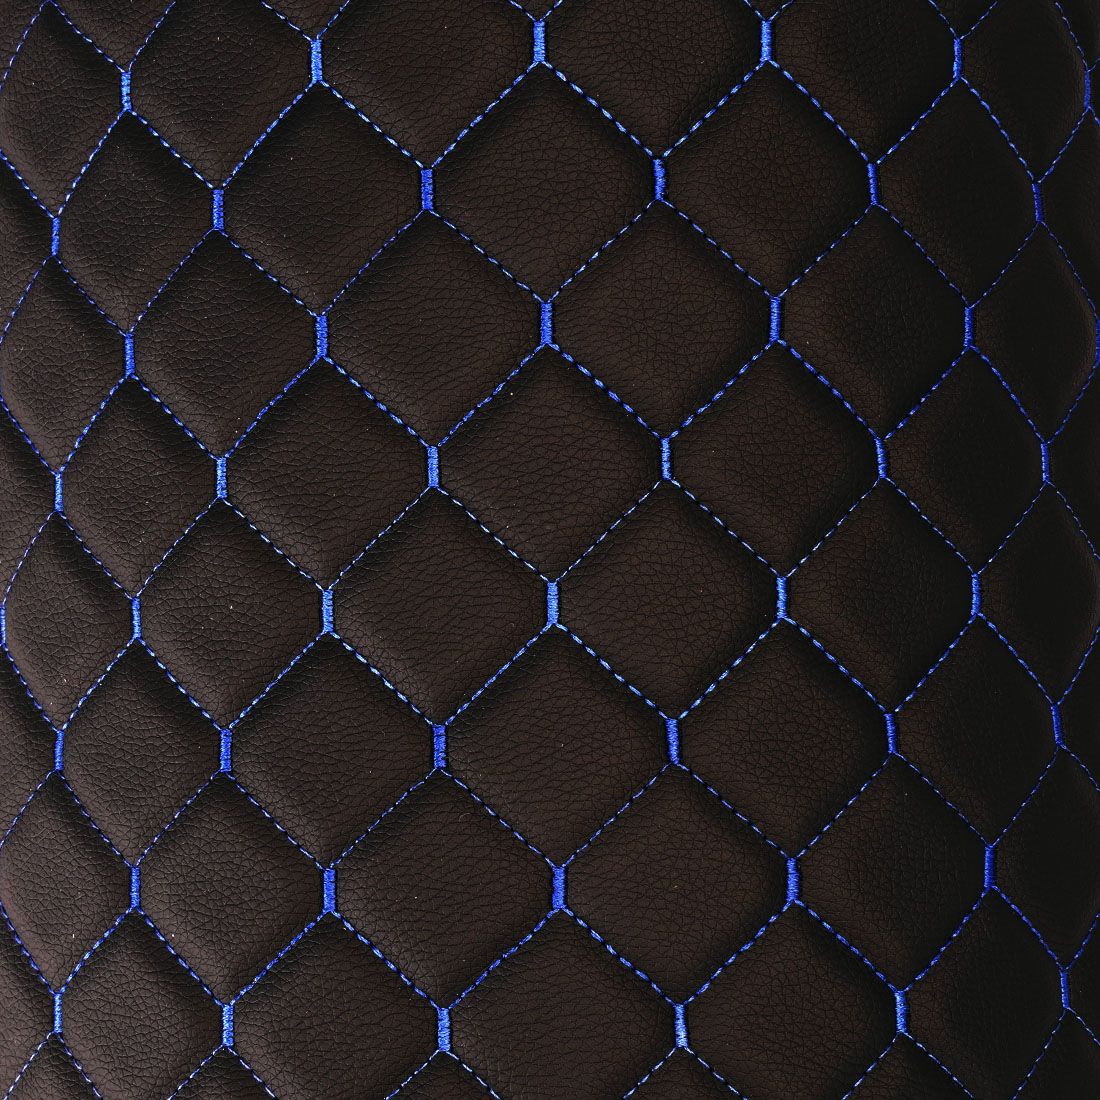 Экокожа стеганая для авто чехлов салона мебели Черная ромб со стяжком Синий 7мм 1.4м х 4м